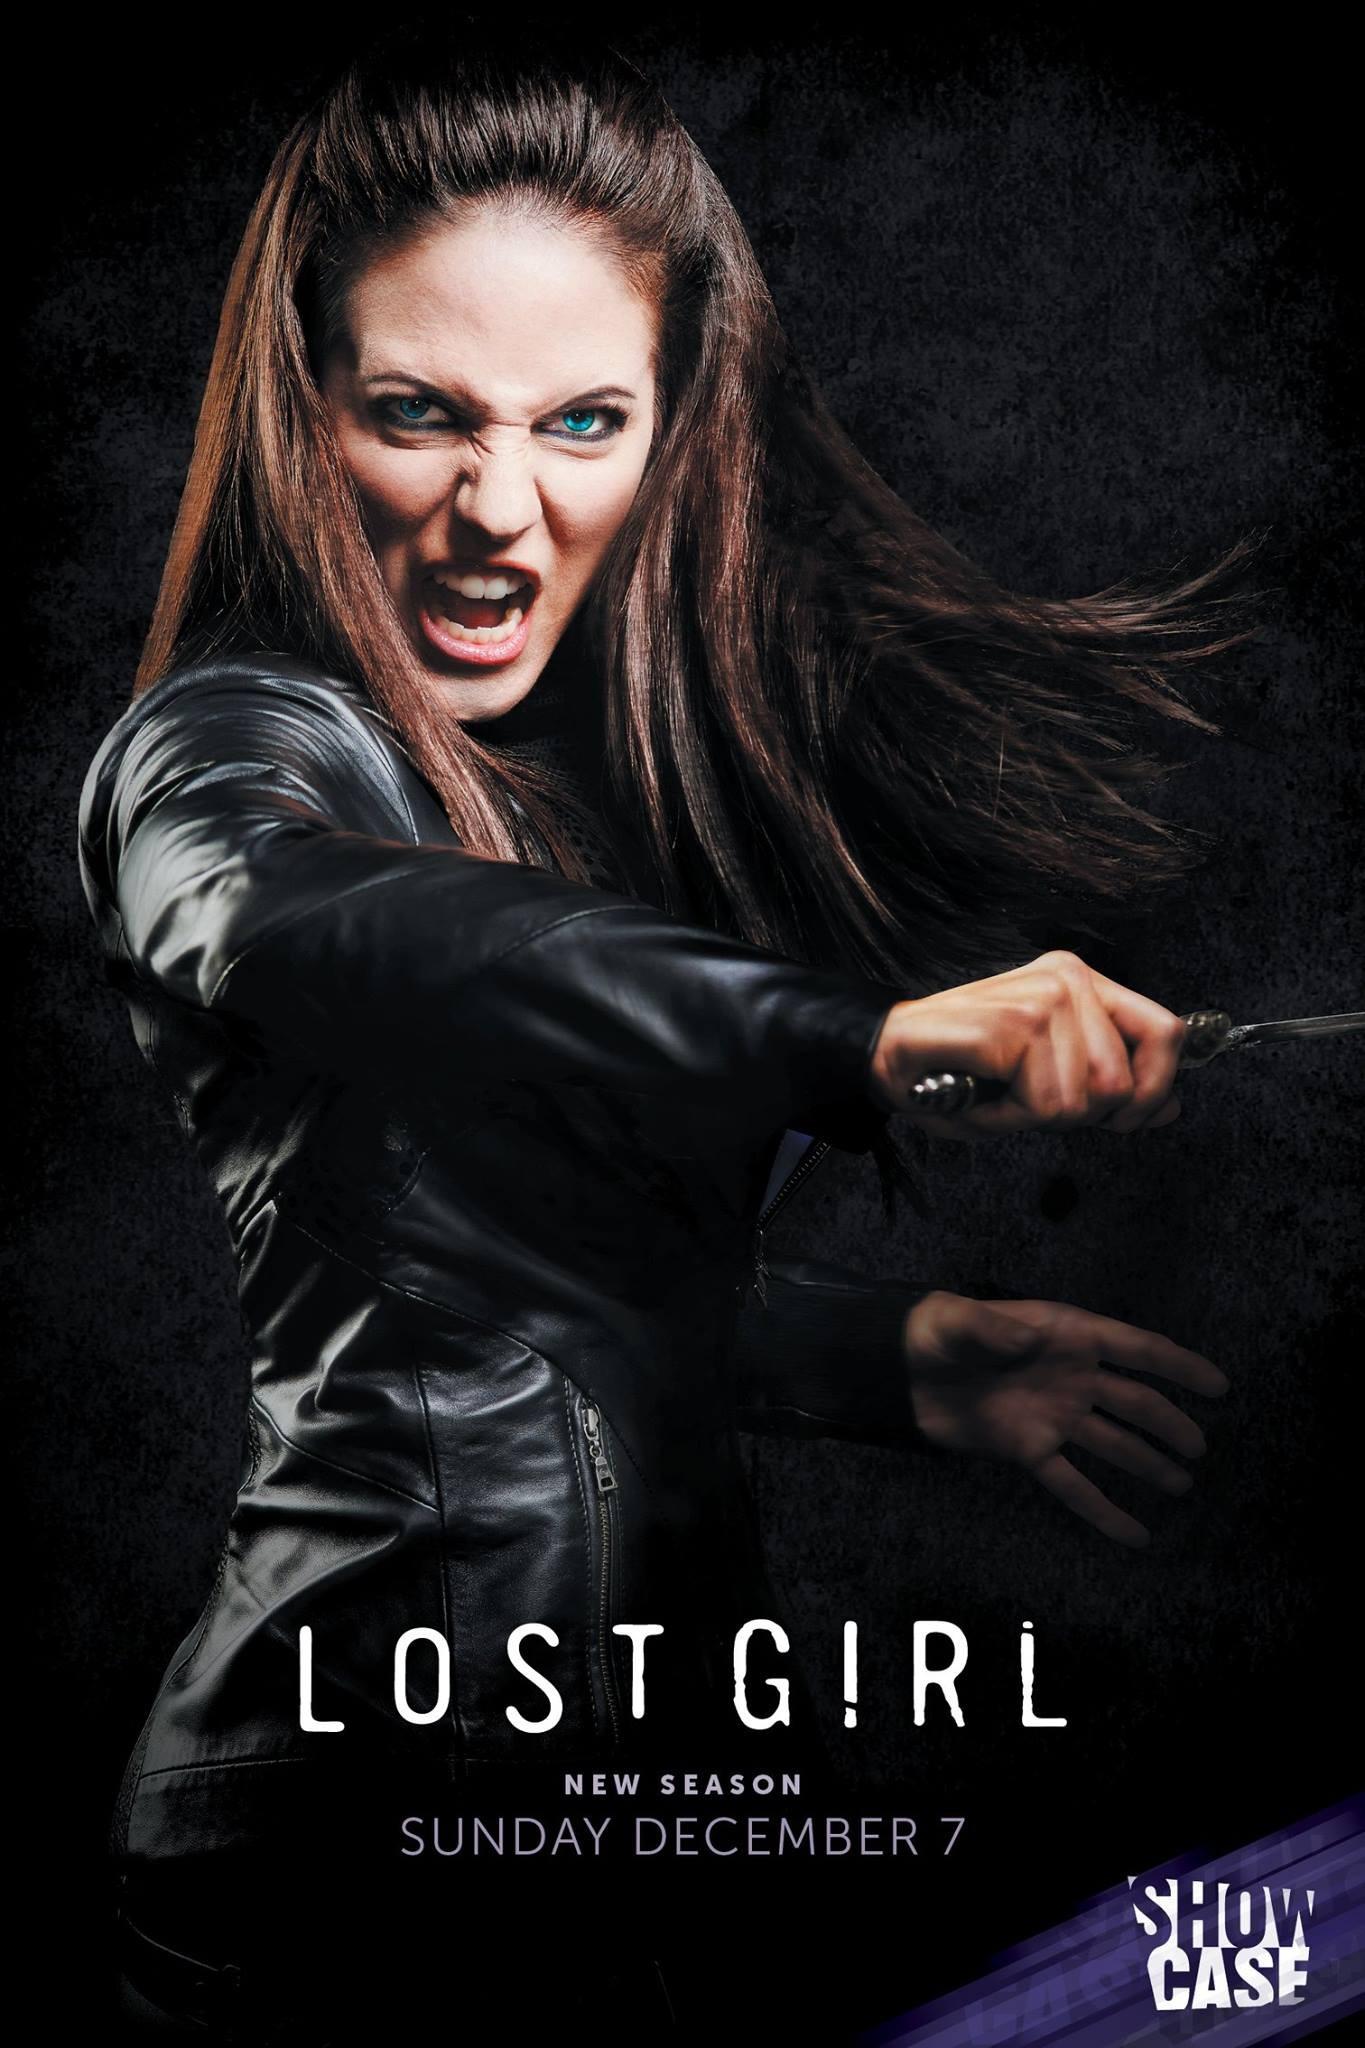 Lost Girl Solo wallpaper 2018 in Lost Girl